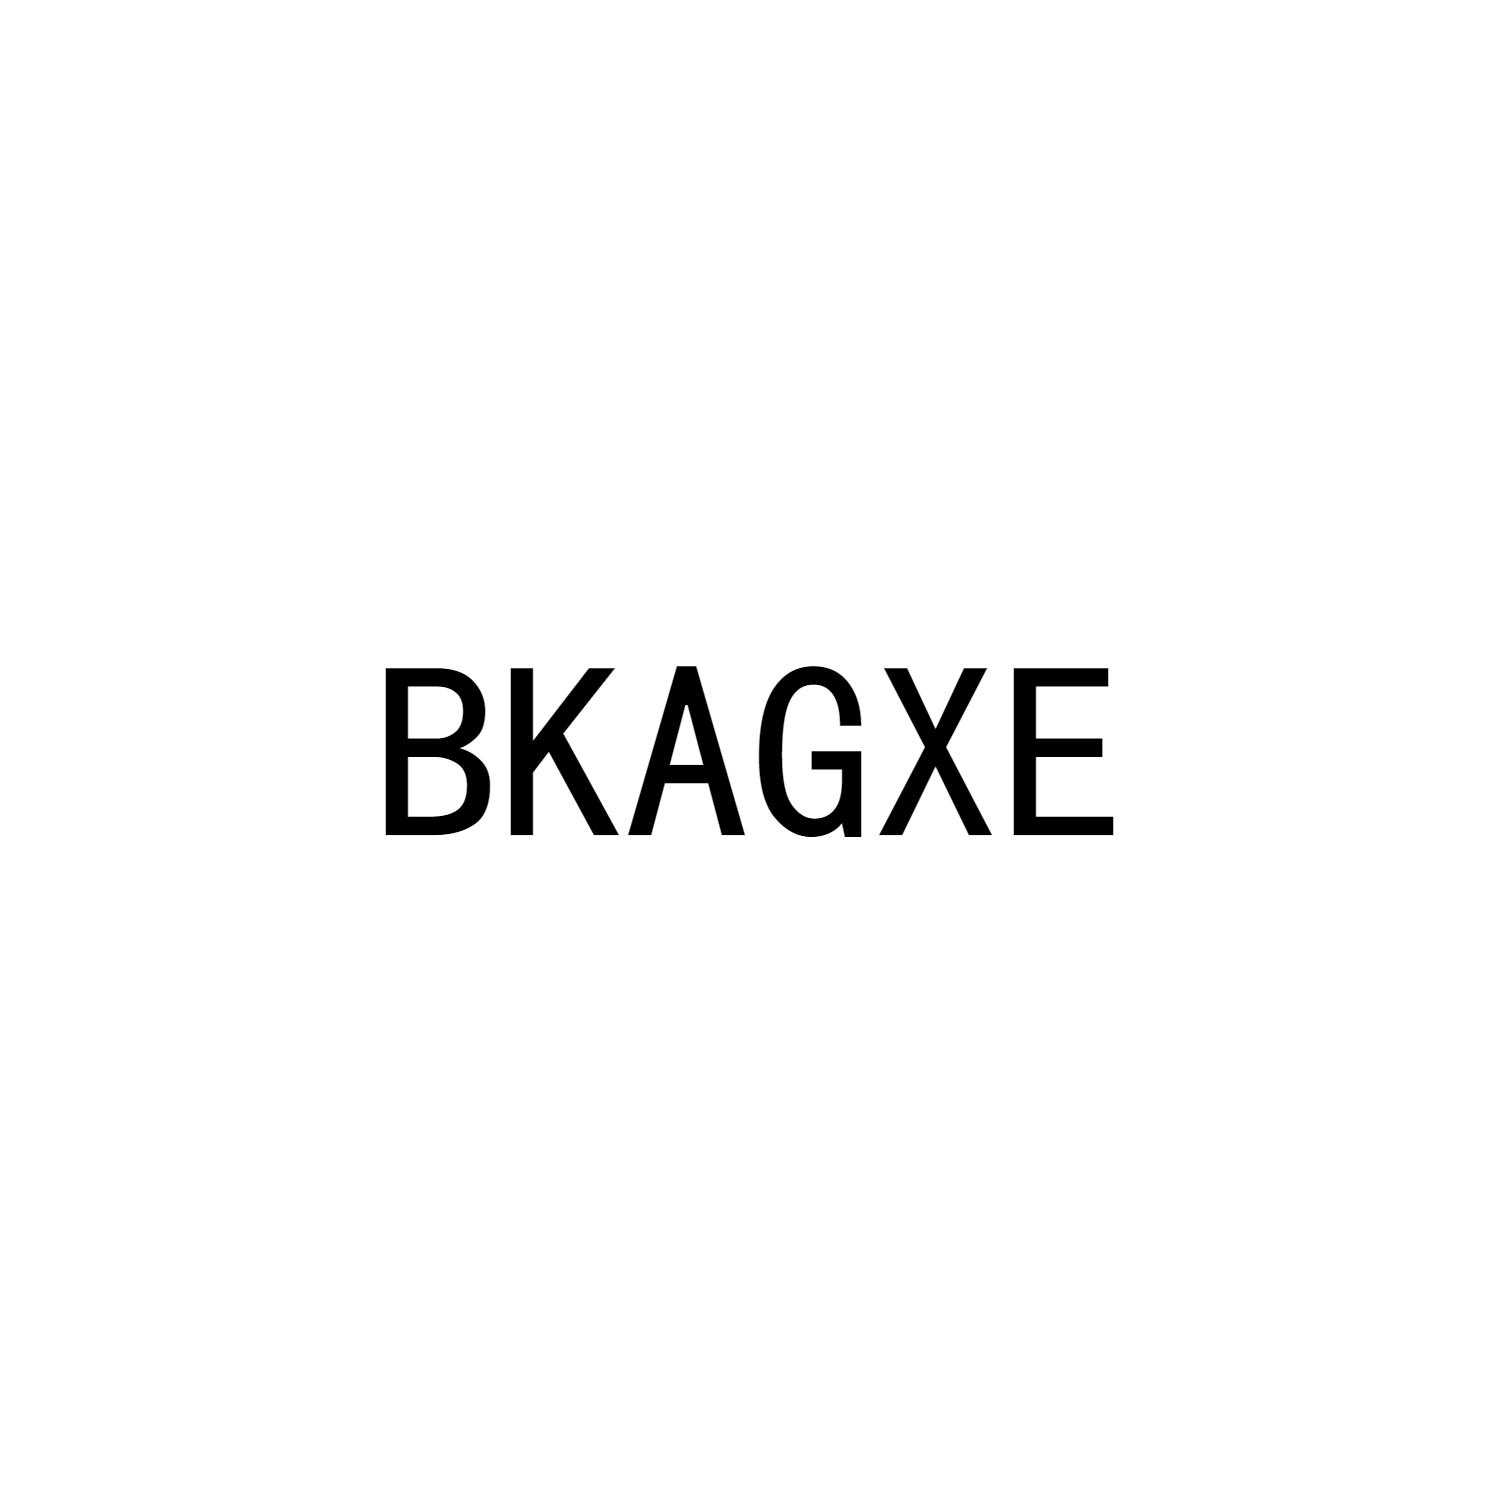 BKAGXE